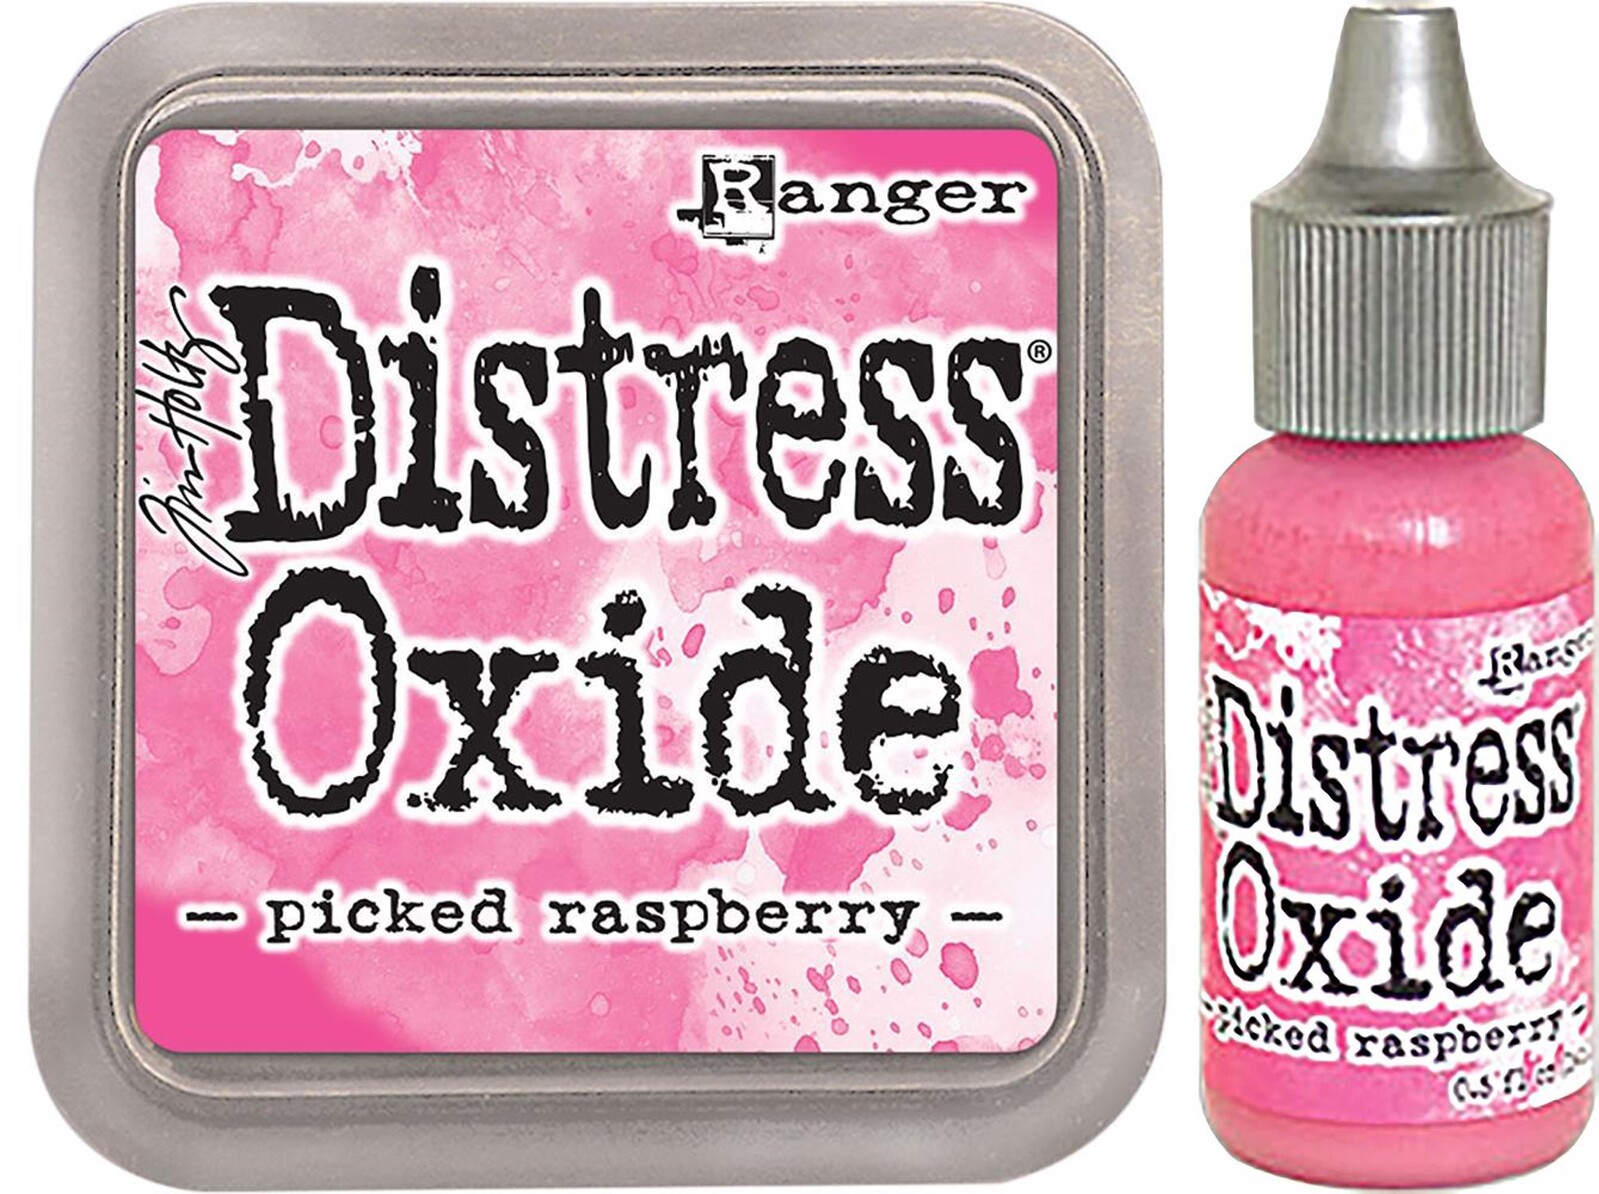 Tim Holtz Distress Oxide Ink Pad + Reinker Picked Raspberry